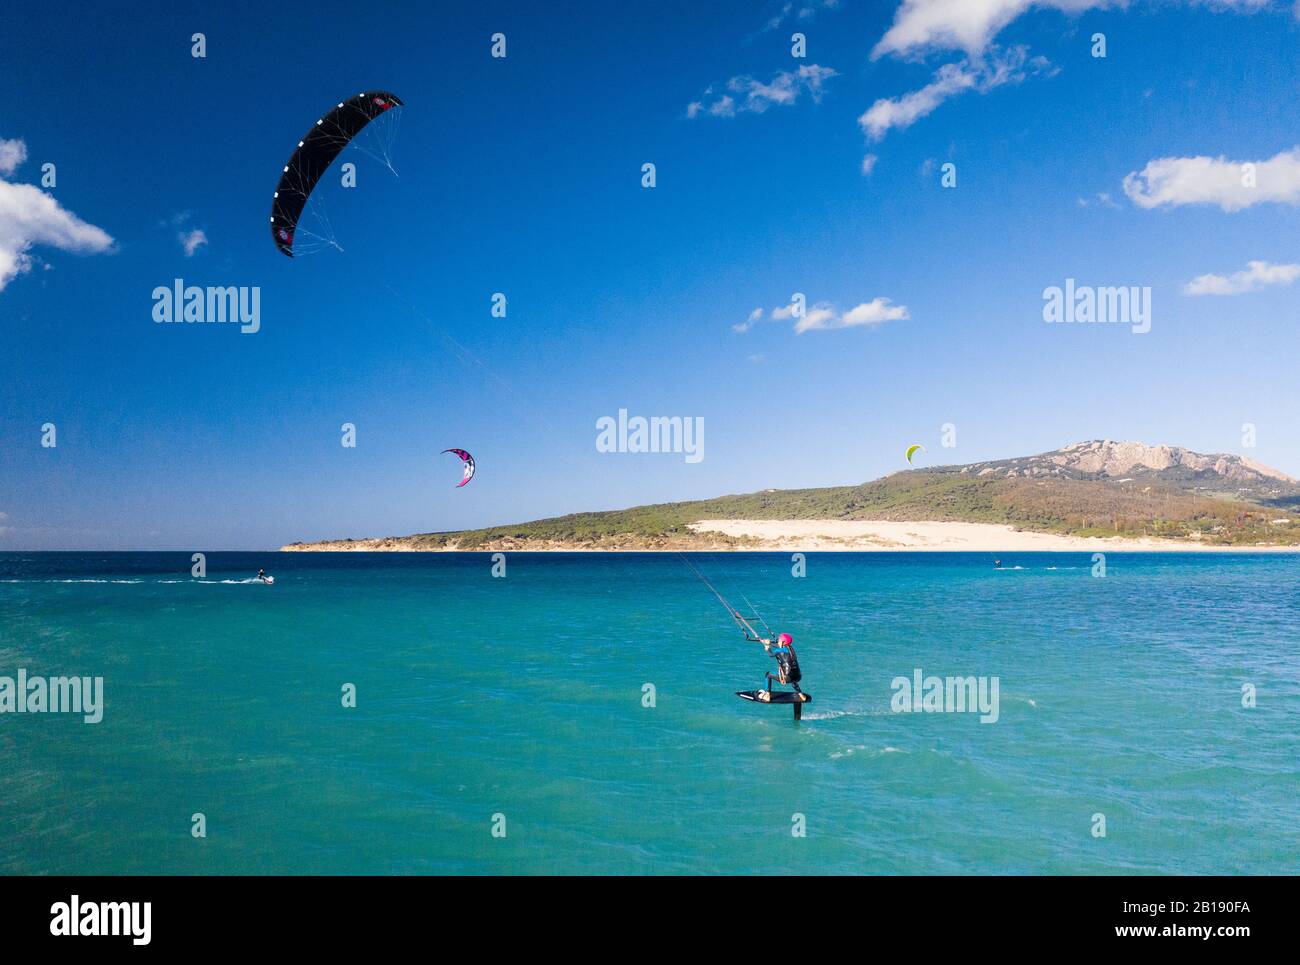 Woman riding a kite foil at Valdevaqueros, Tarifa, Costa de la Luz, Cadiz, Andalusia, Spain. Stock Photo